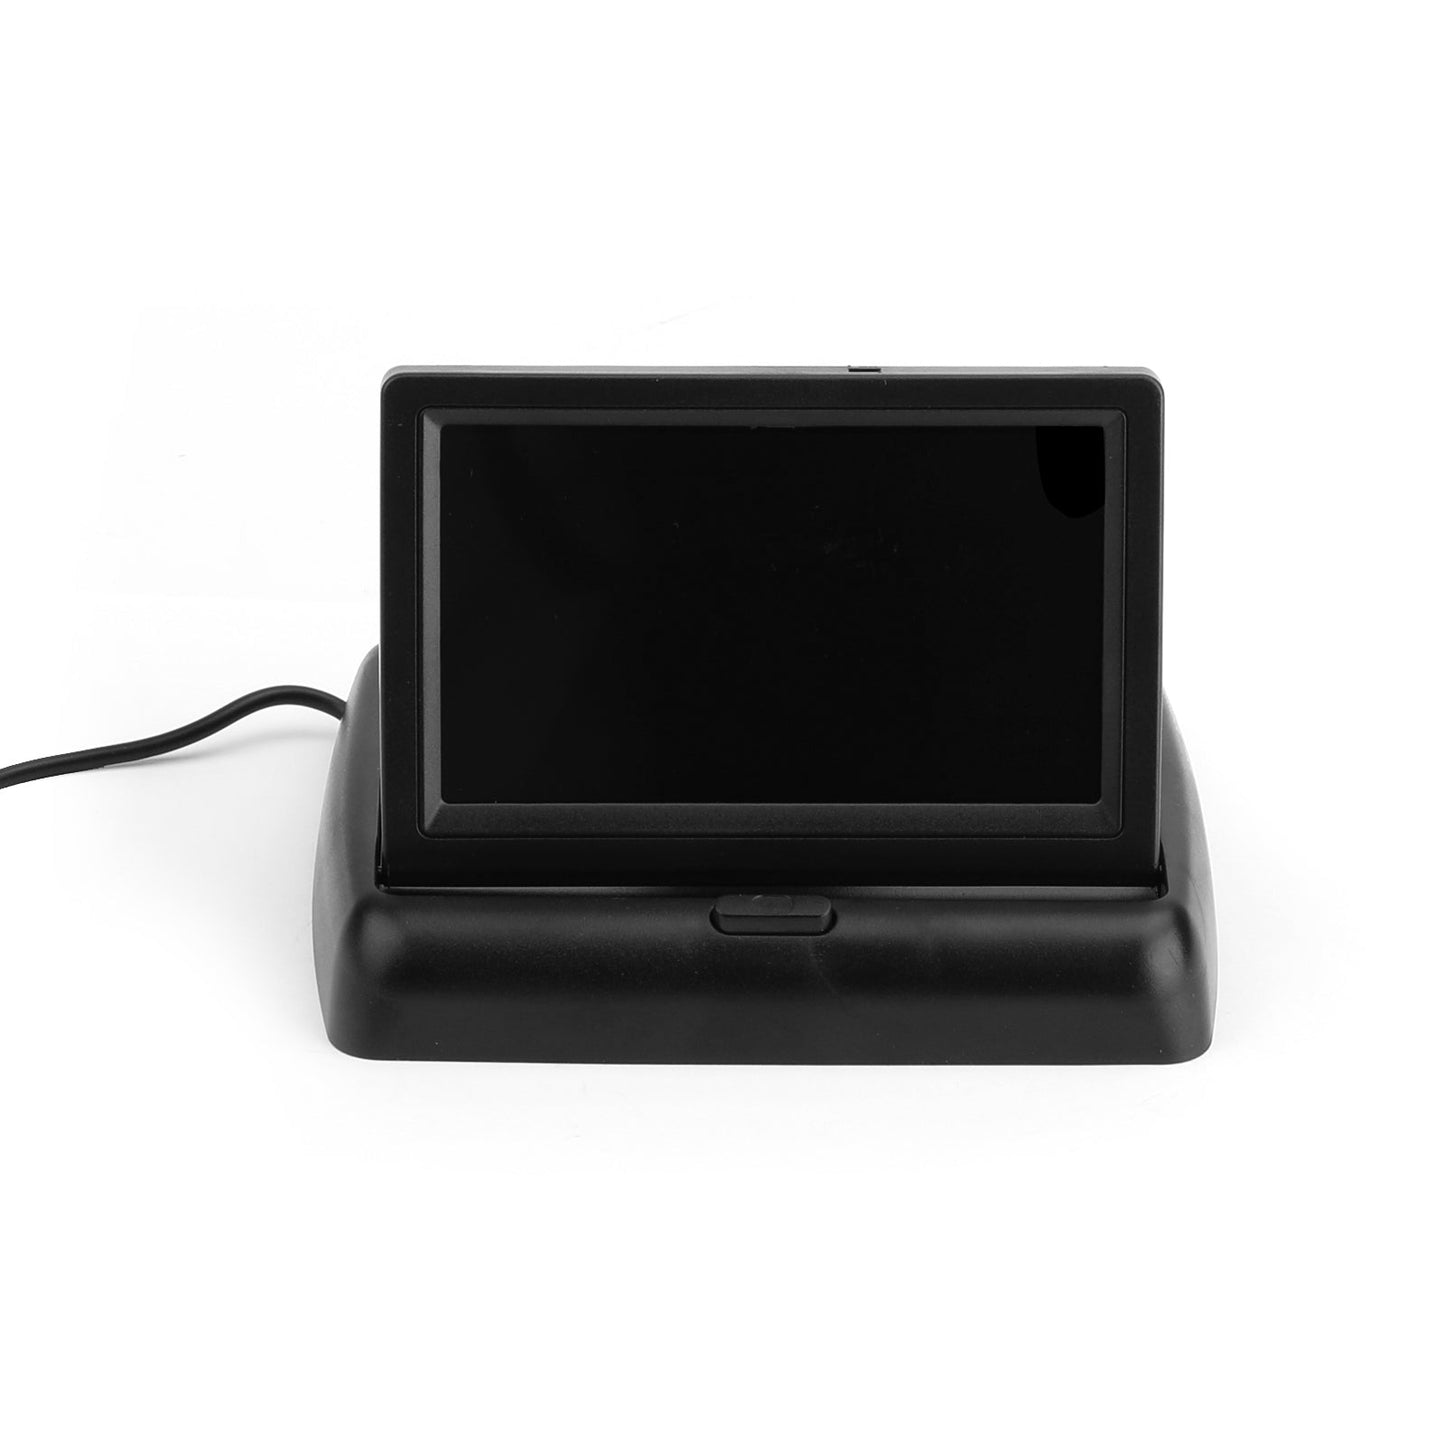 4.3" TFT LCD NTSC PAL Foldable 4.3inch Car Monitor Night Parking Assist